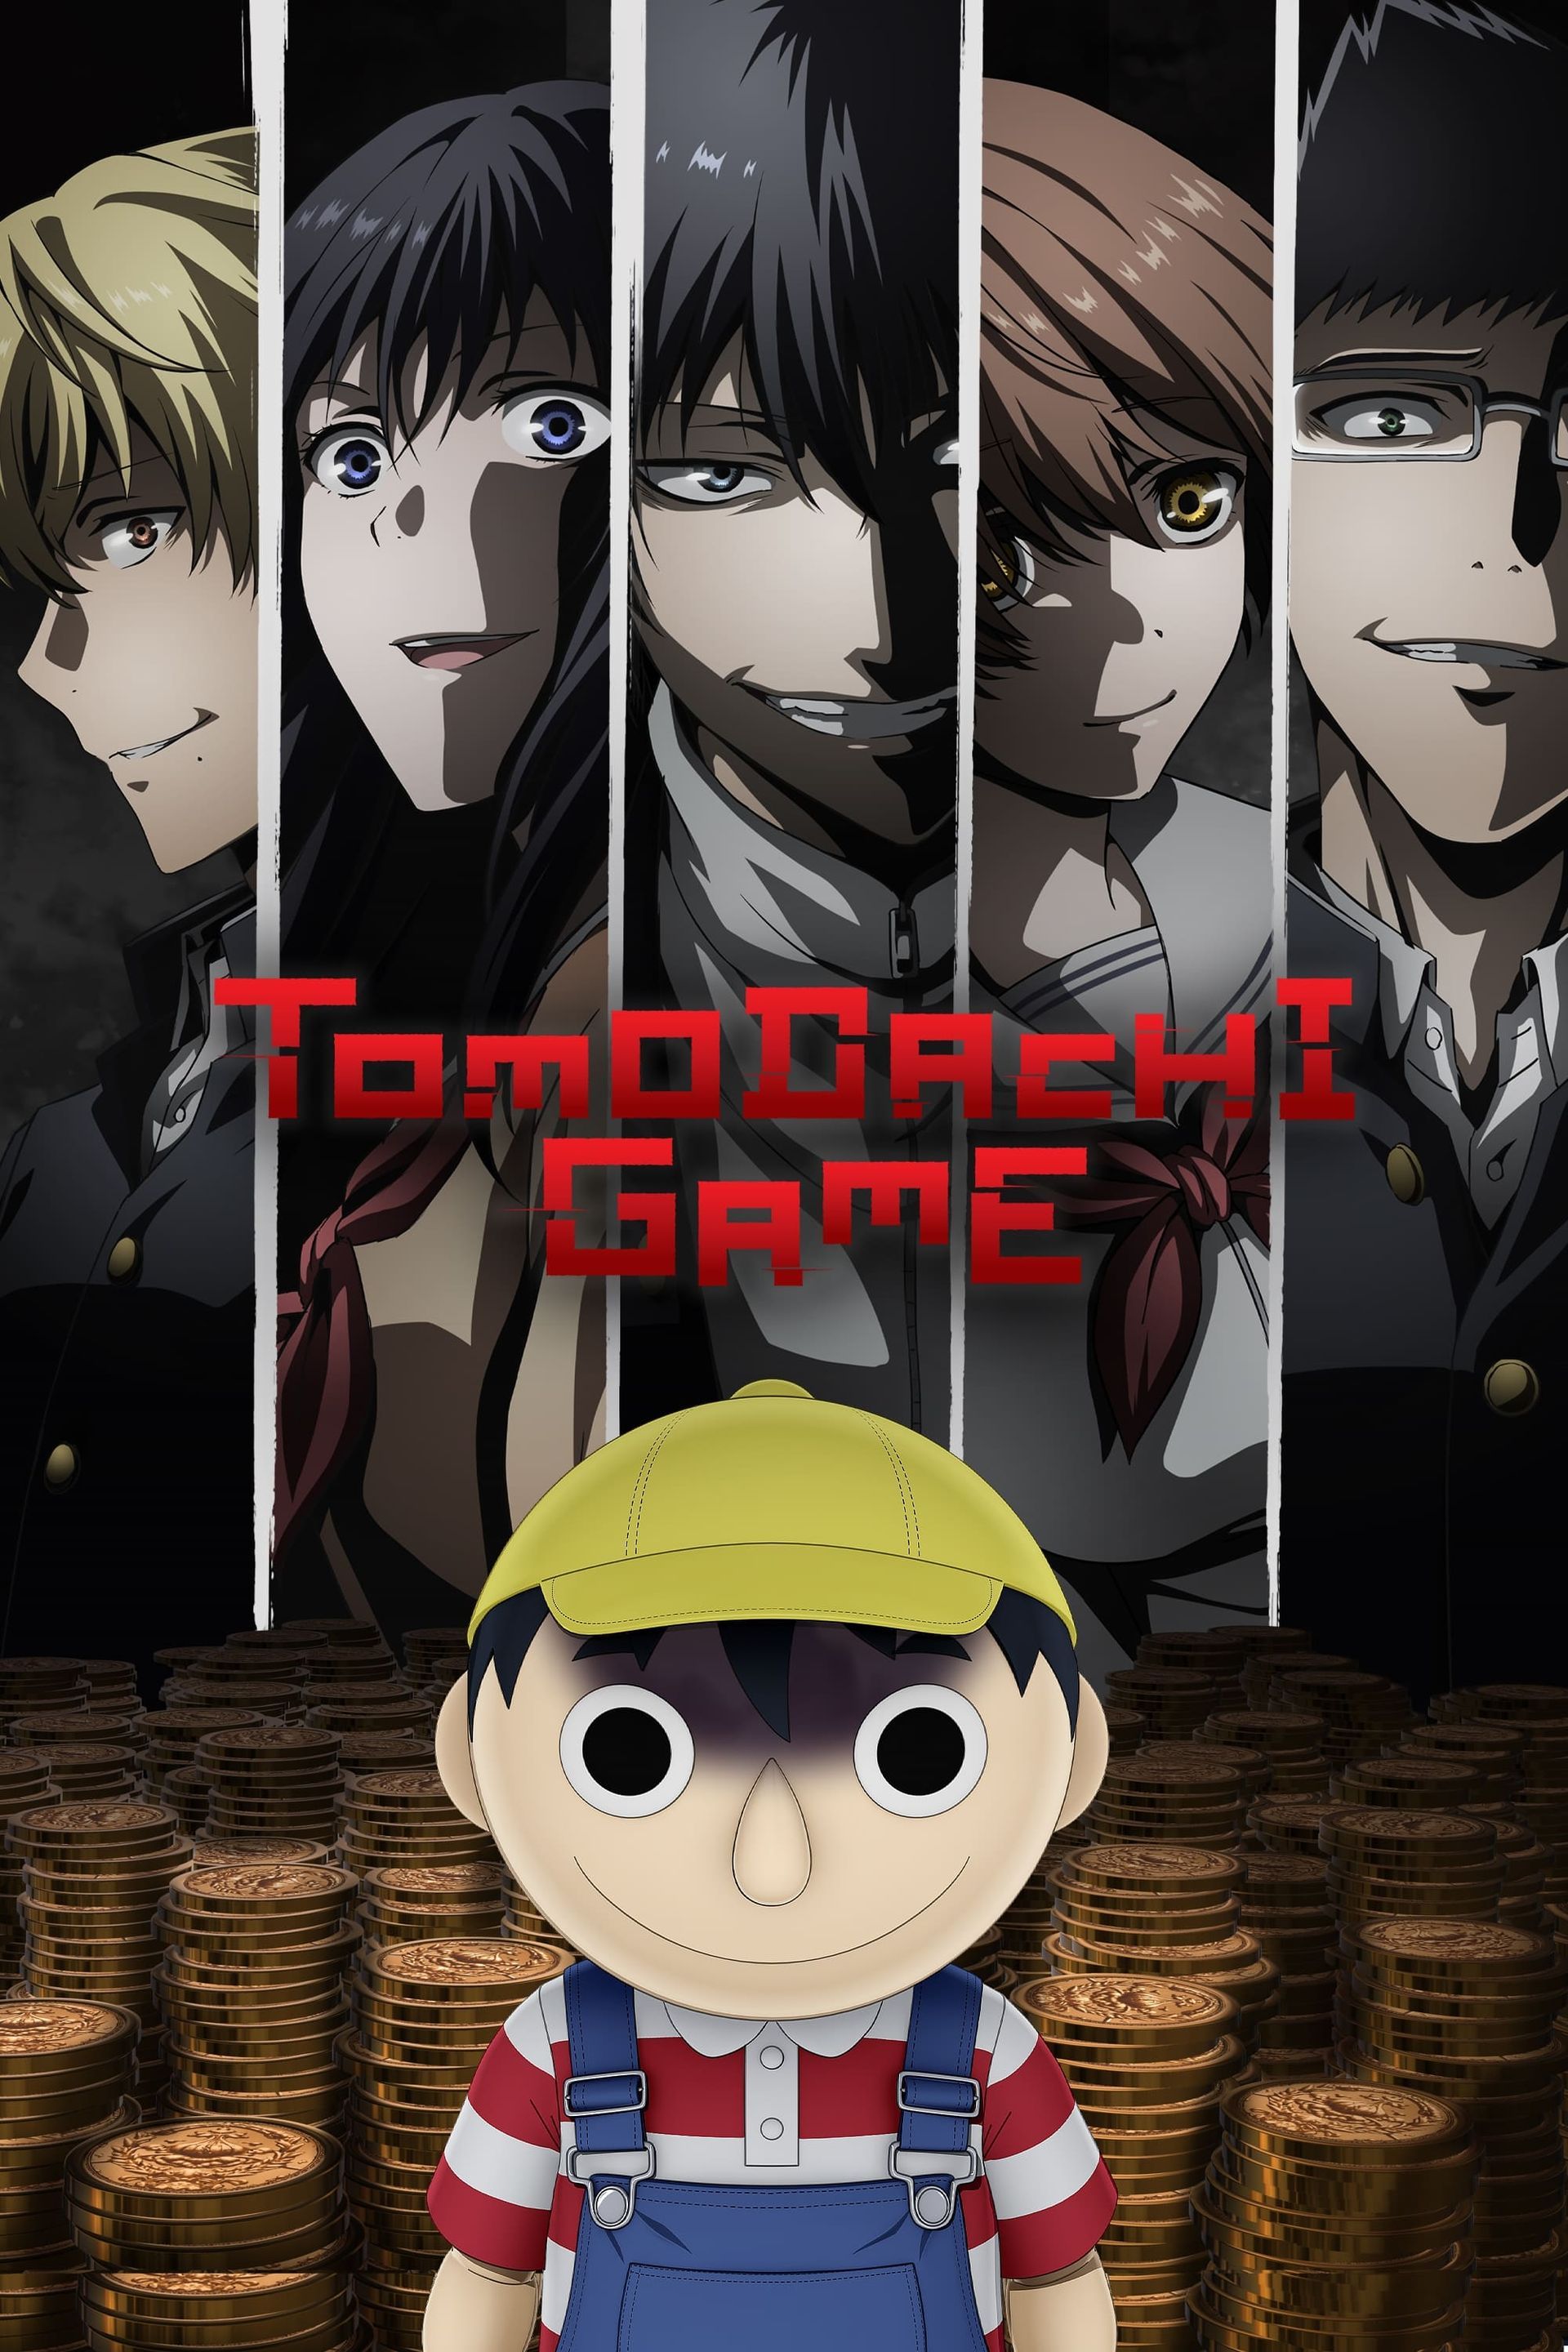 Tomodachi Game' Manga Gets TV Anime